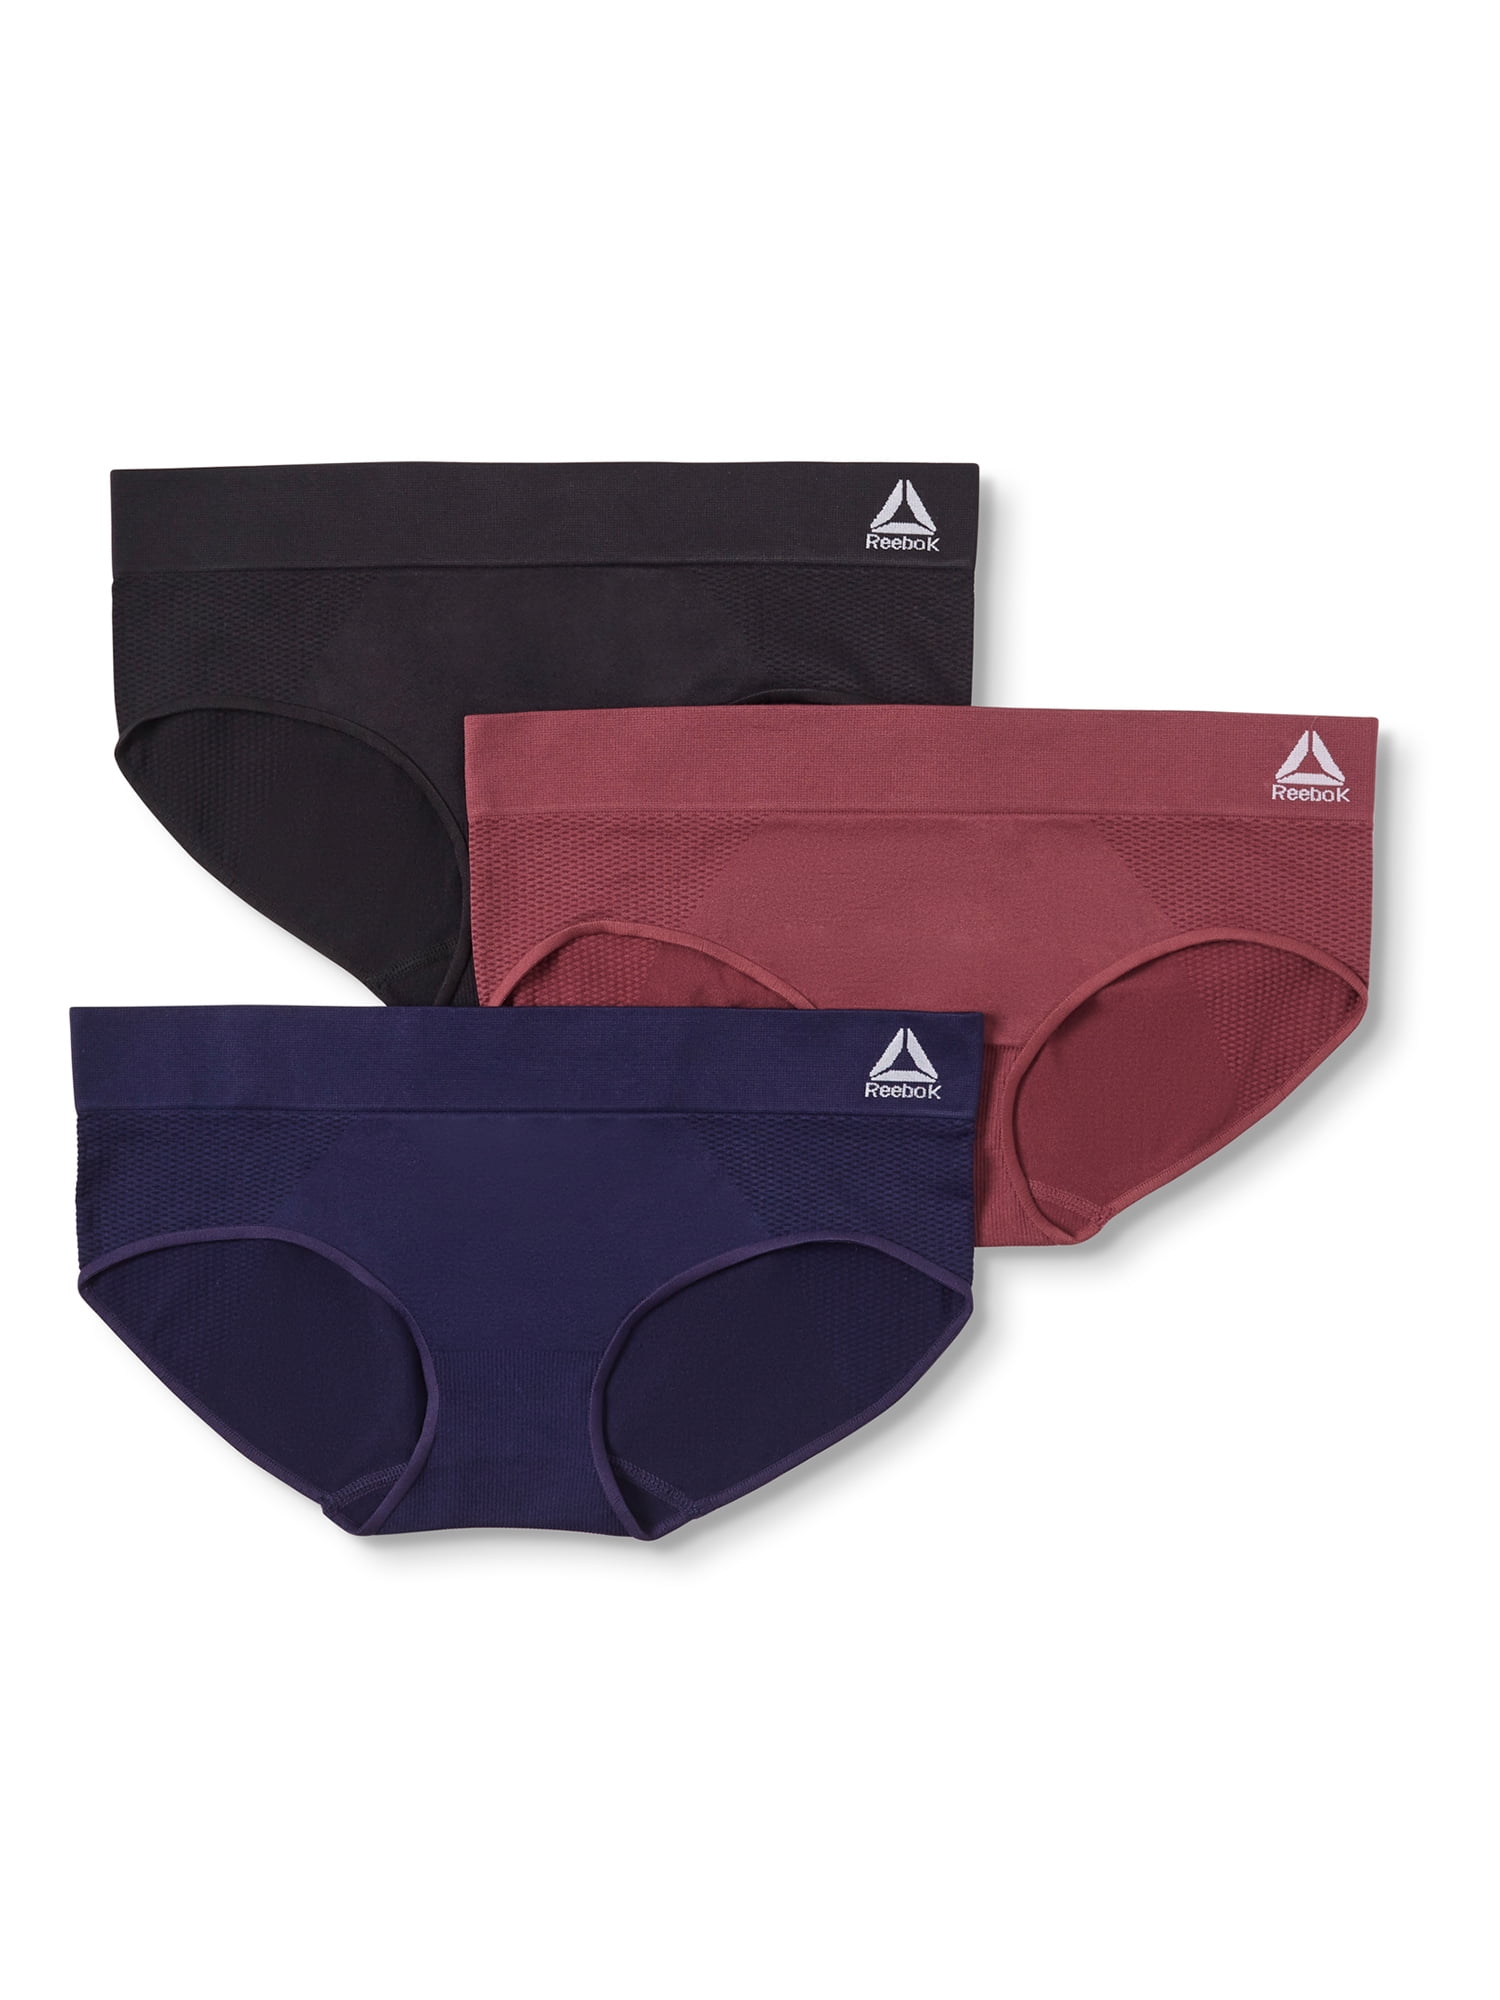 Reebok Women's Underwear - Seamless Hipster Briefs 5 Pack, Size Small, Grey /Pink/Black 